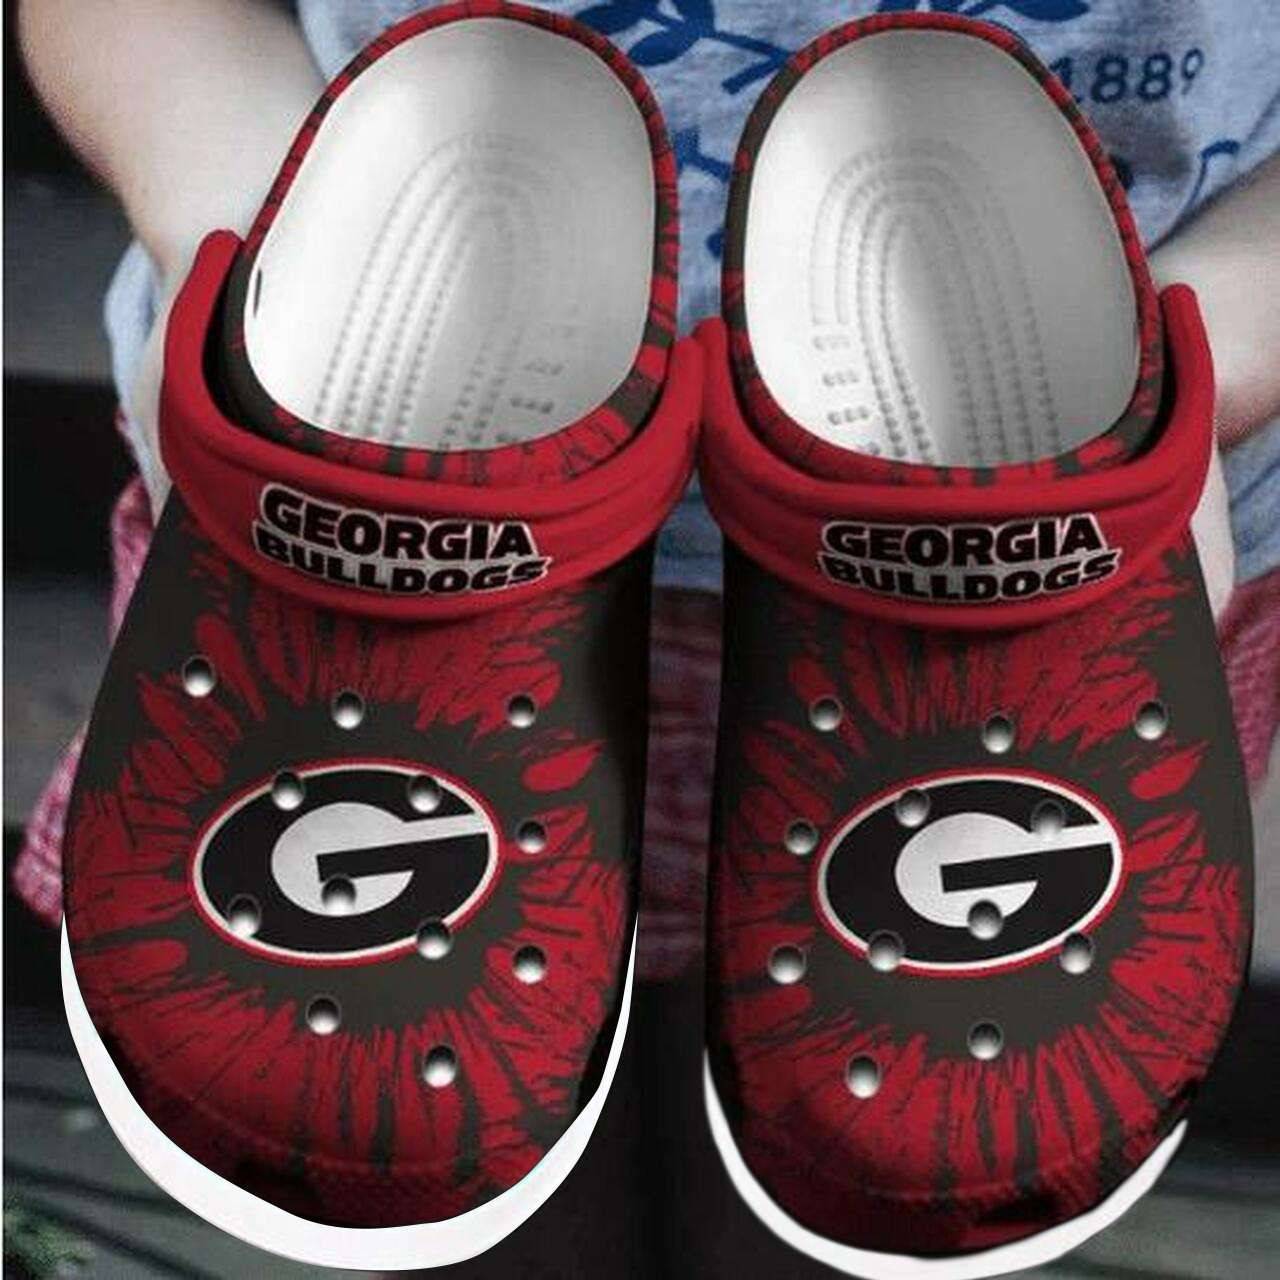 Georgia Bulldogs Crocs Crocband Clogs